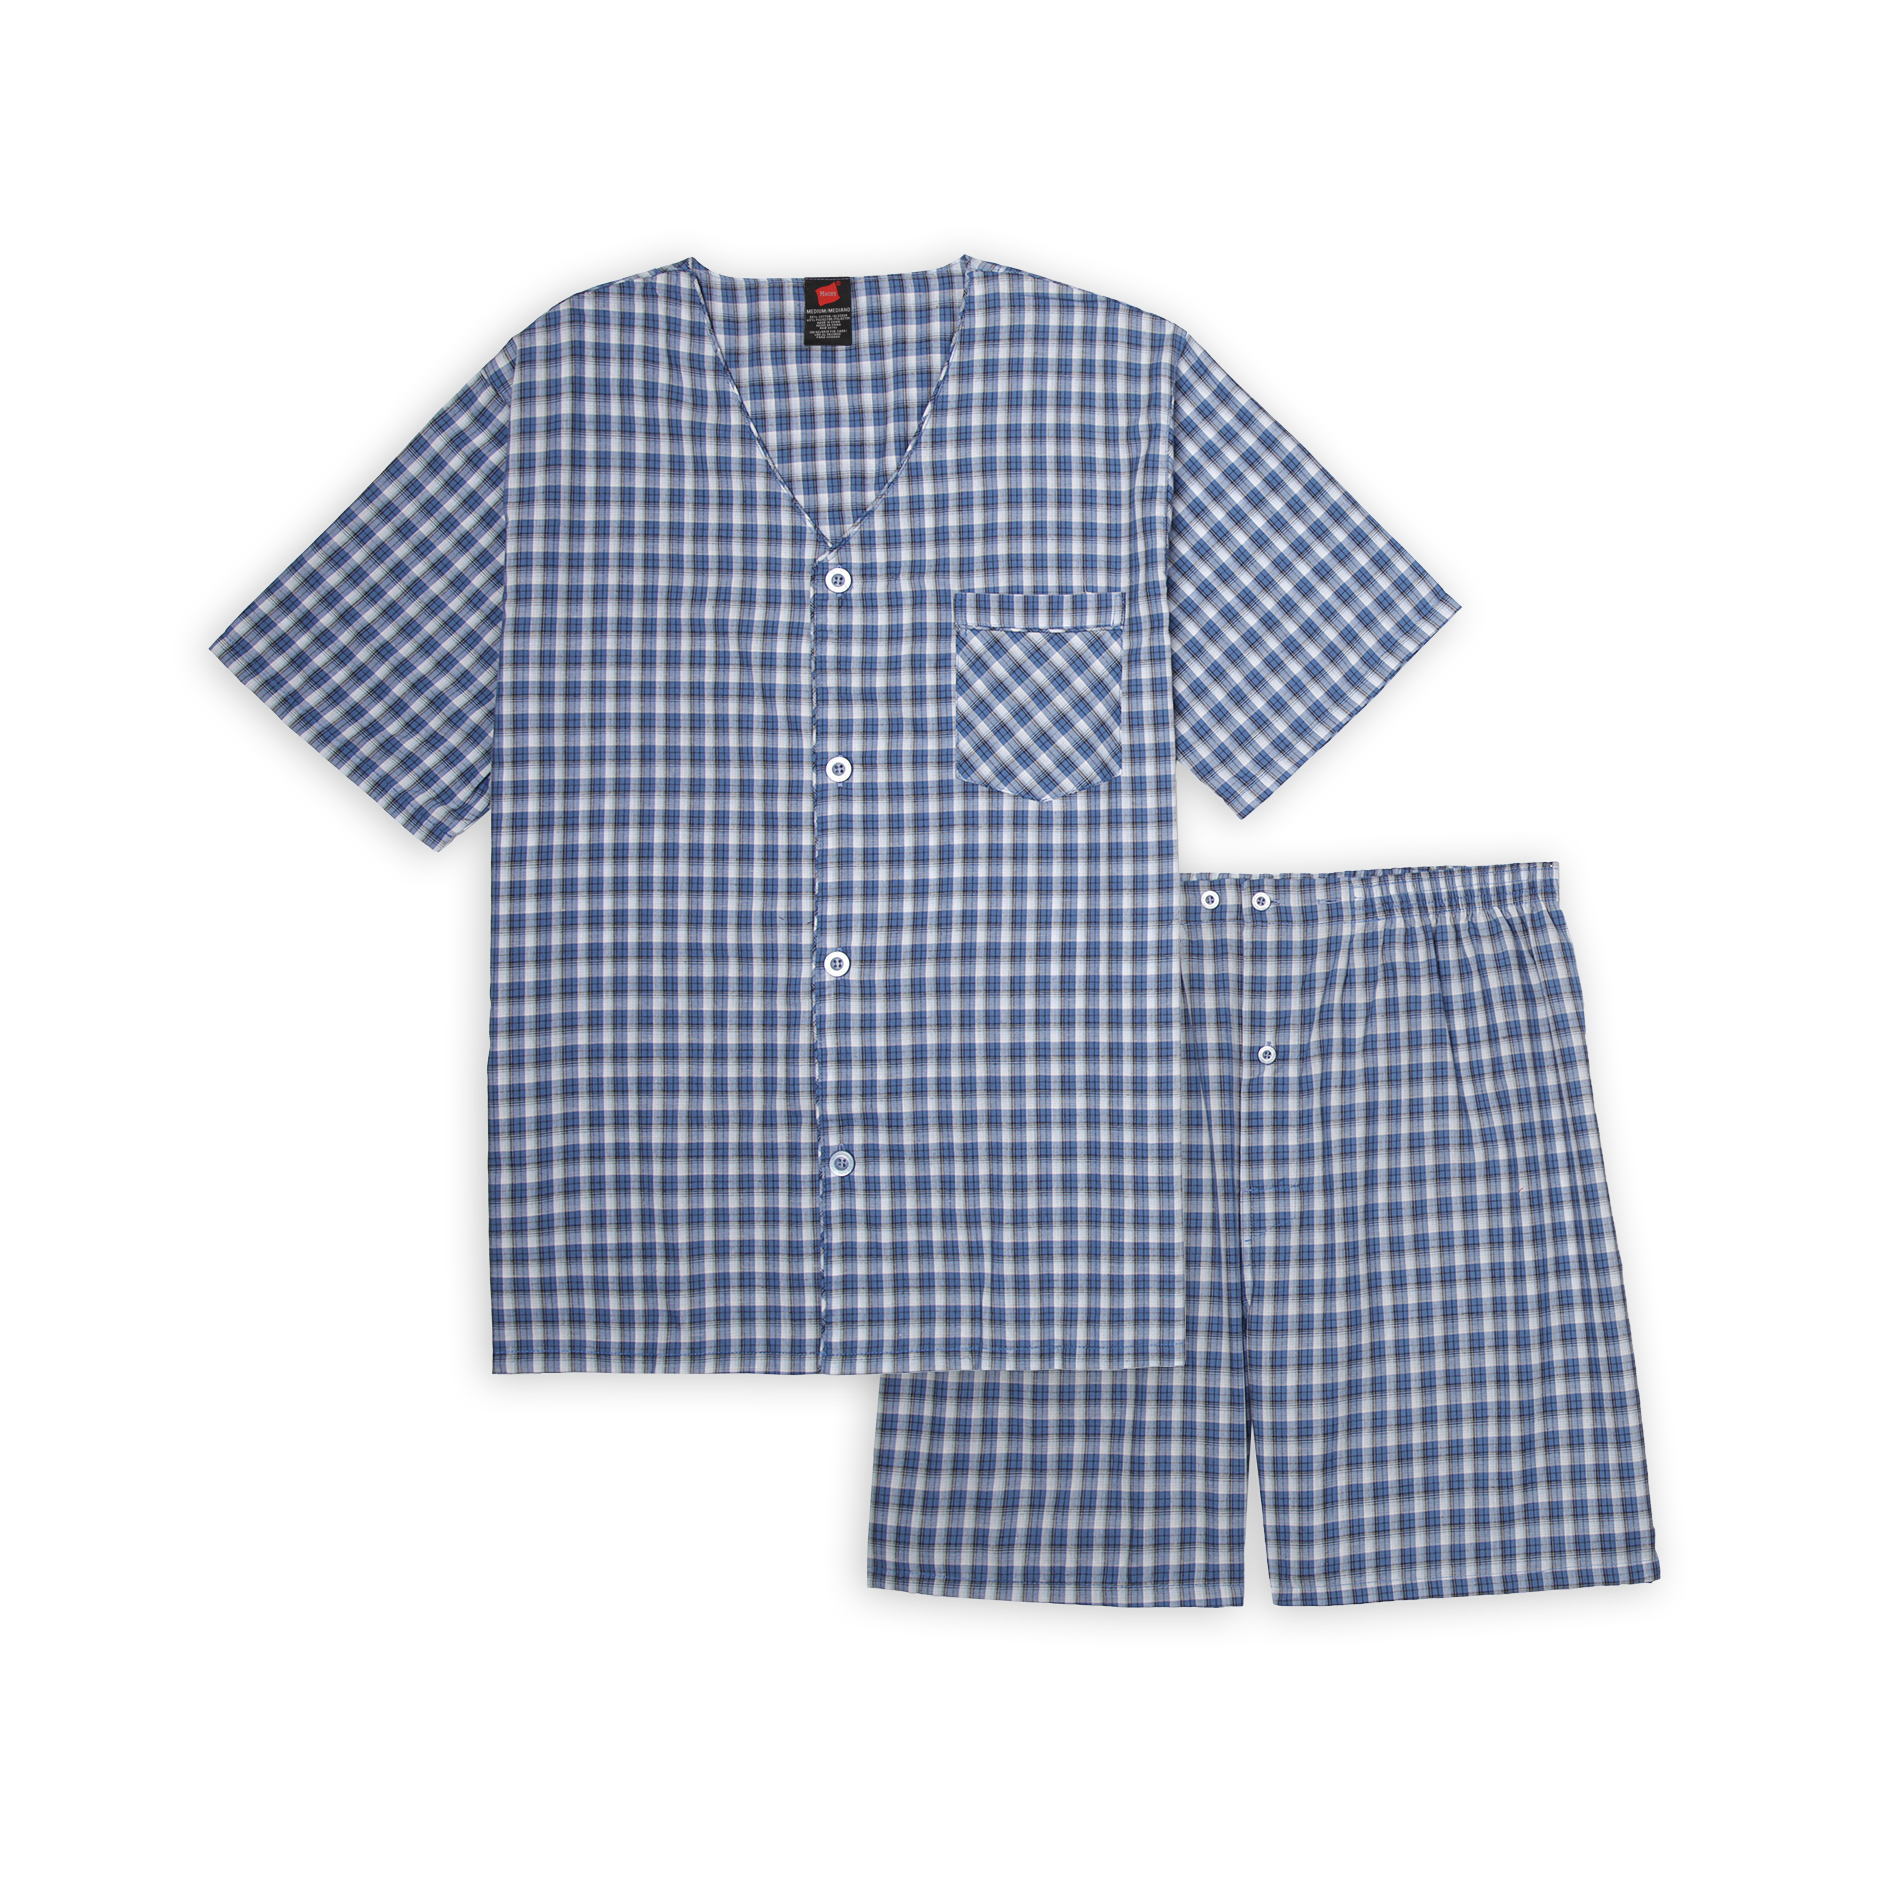 Hanes Men's Pajamas - Checkered